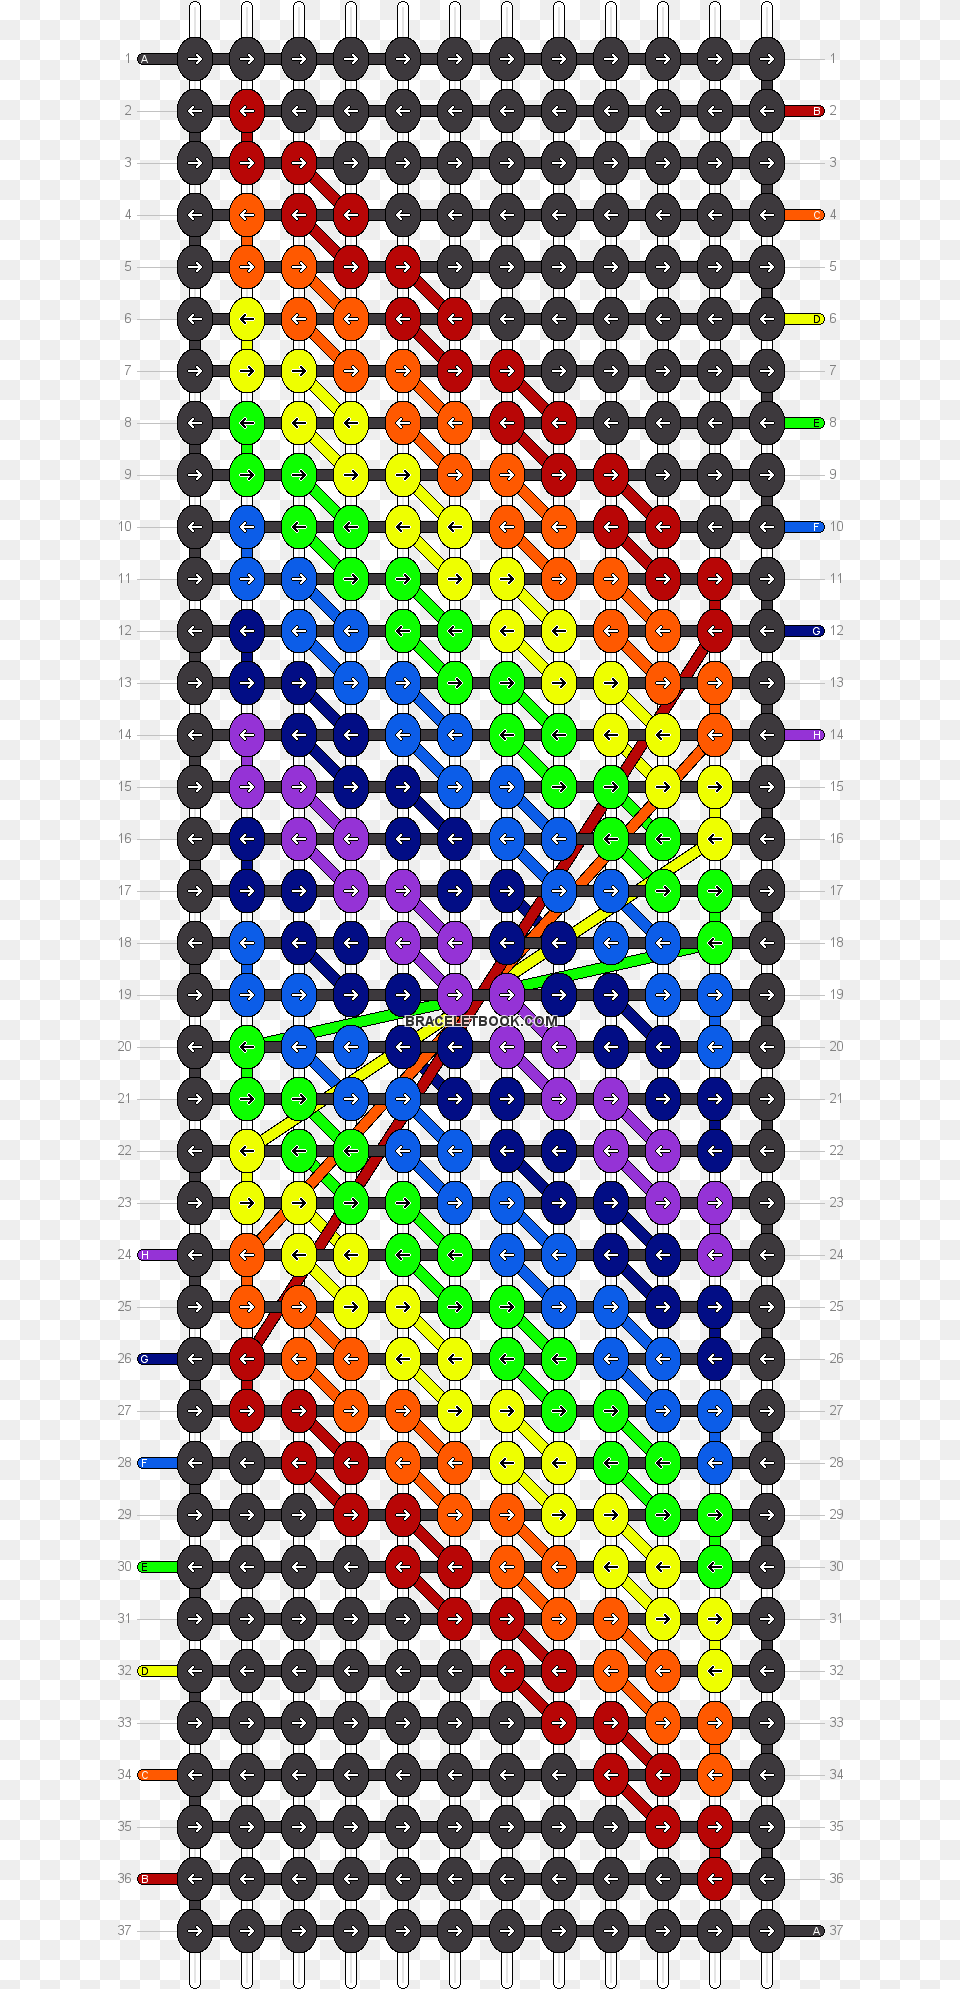 Alpha Pattern Diagonal Friendship Bracelet Pattern Png Image